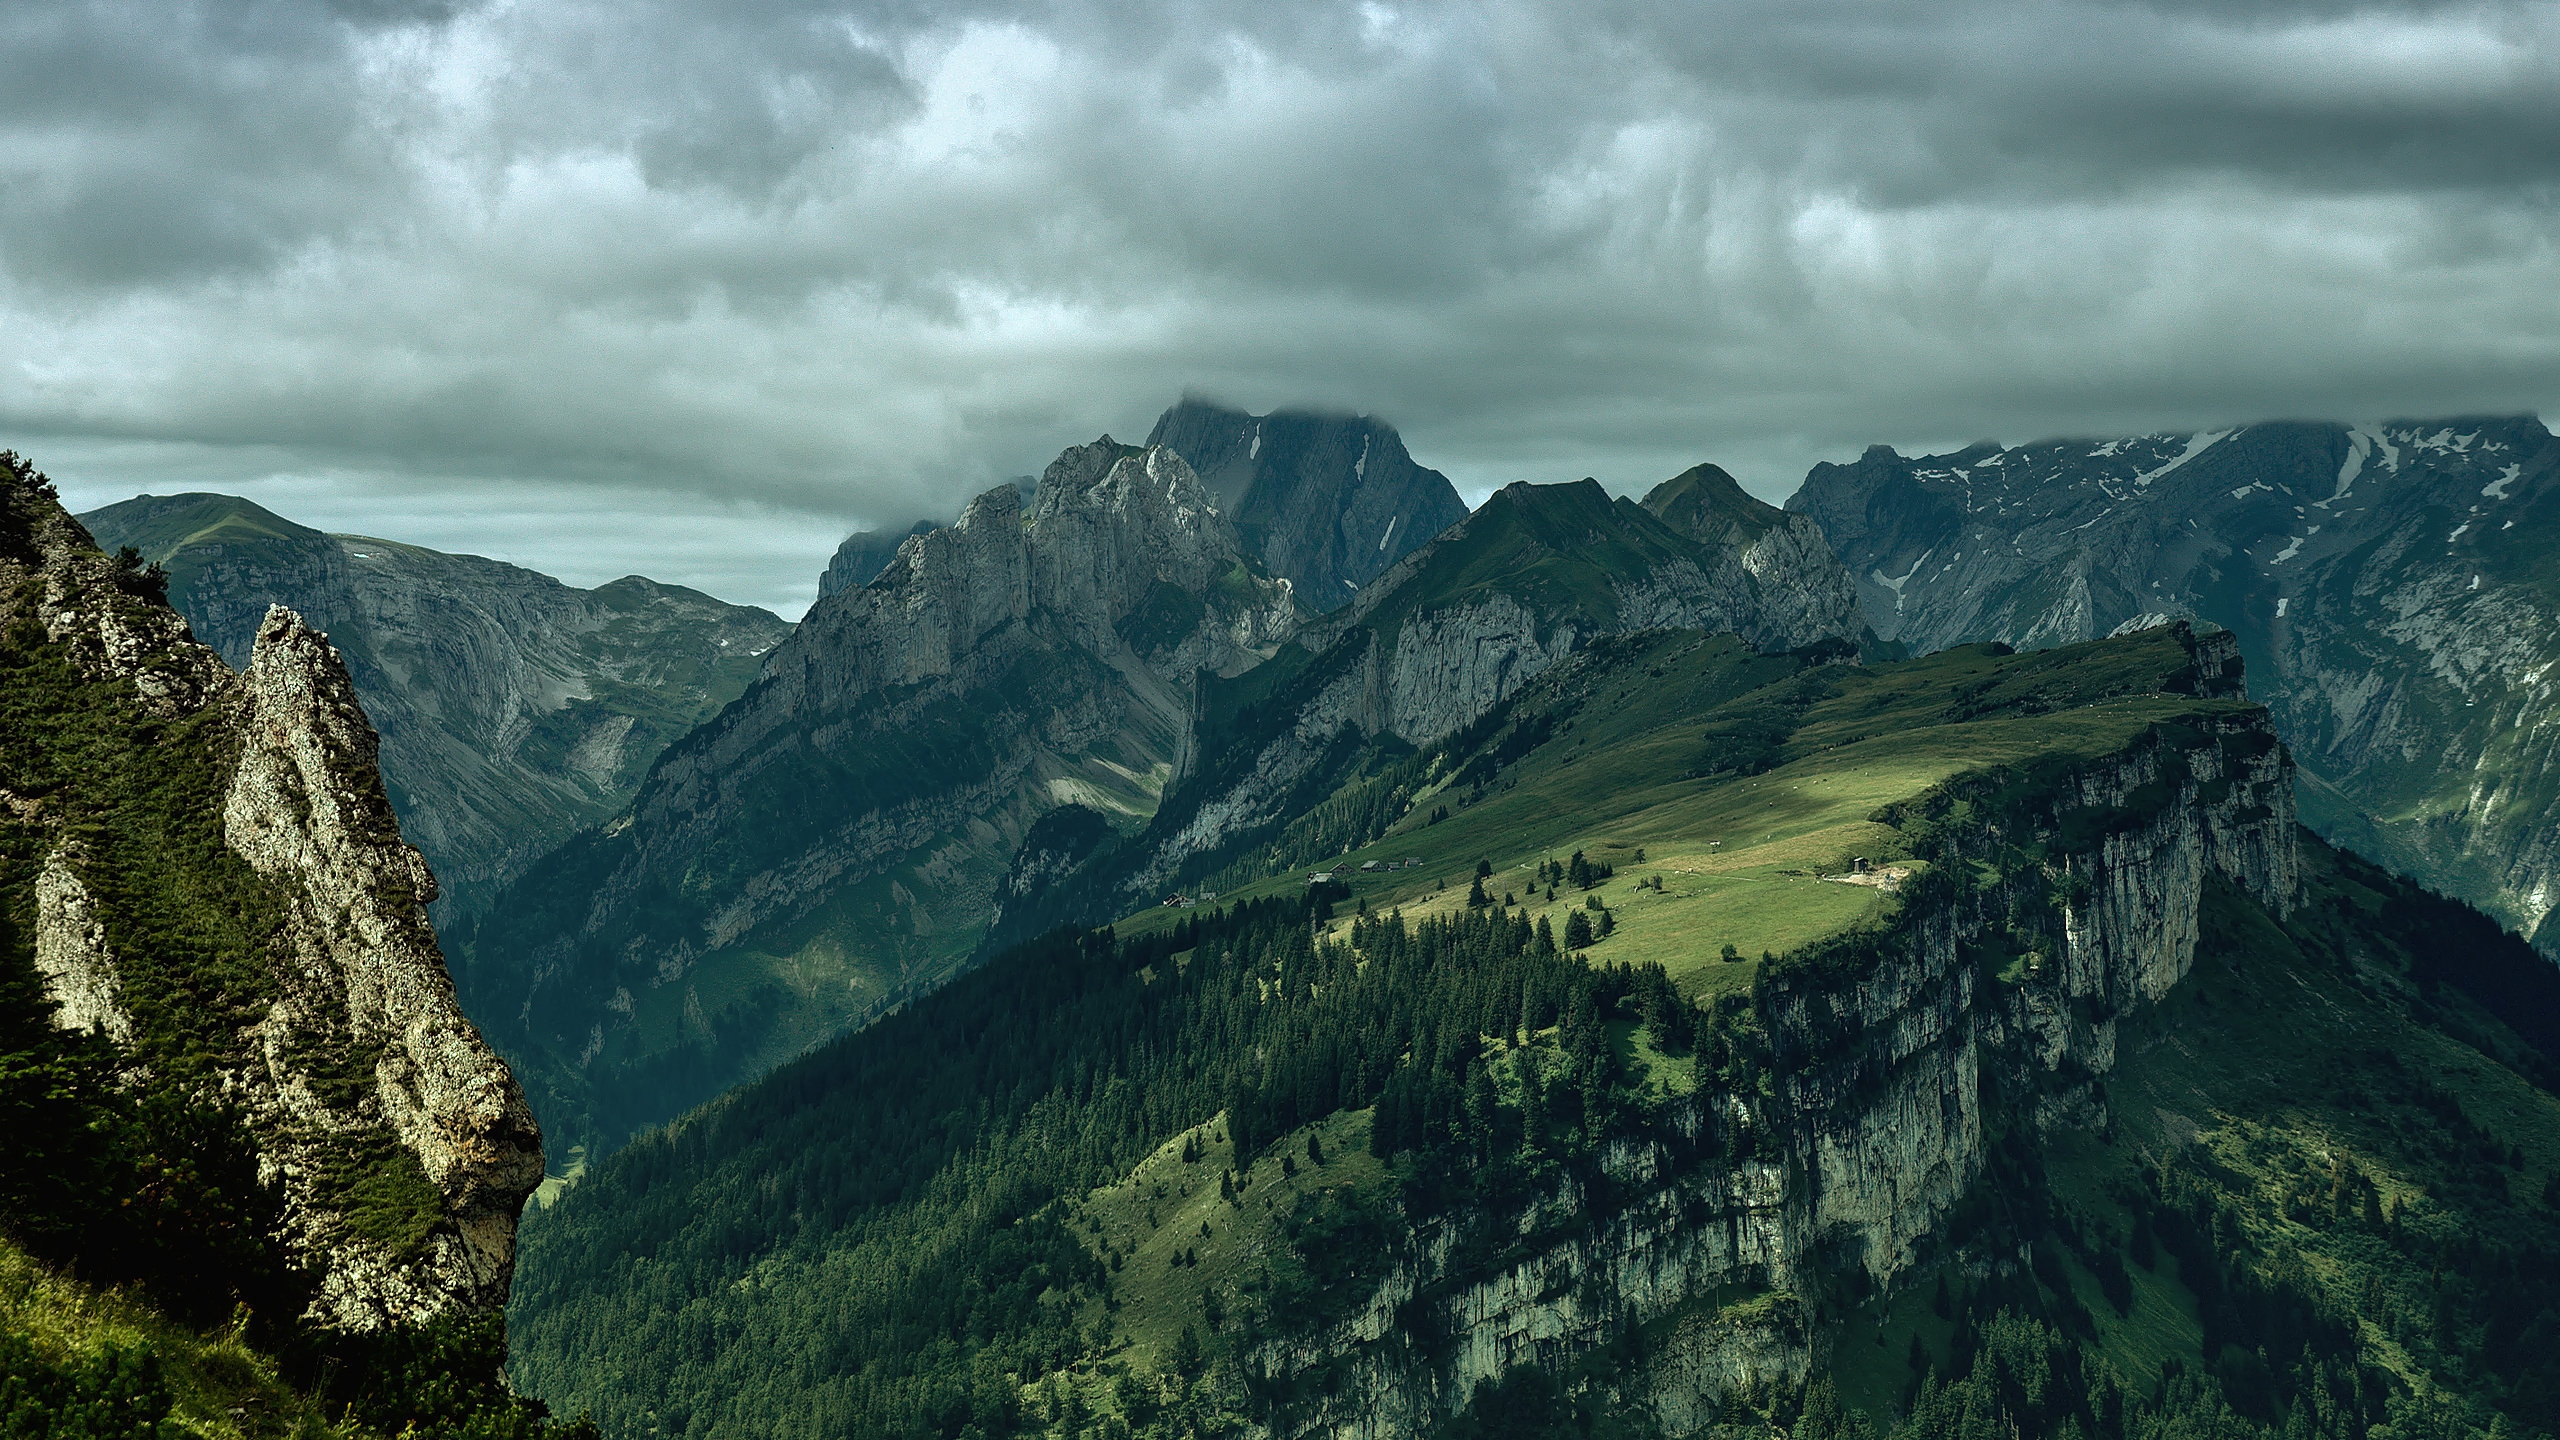 Superb Mountain Landscape for 2560x1440 HDTV resolution